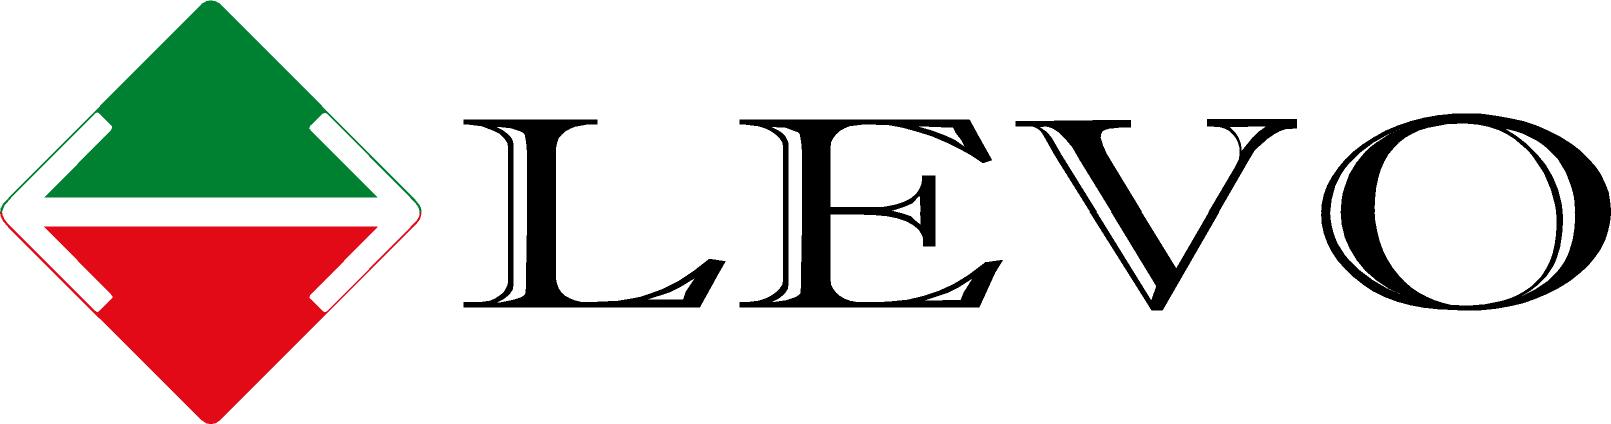 Logo Levo 2009